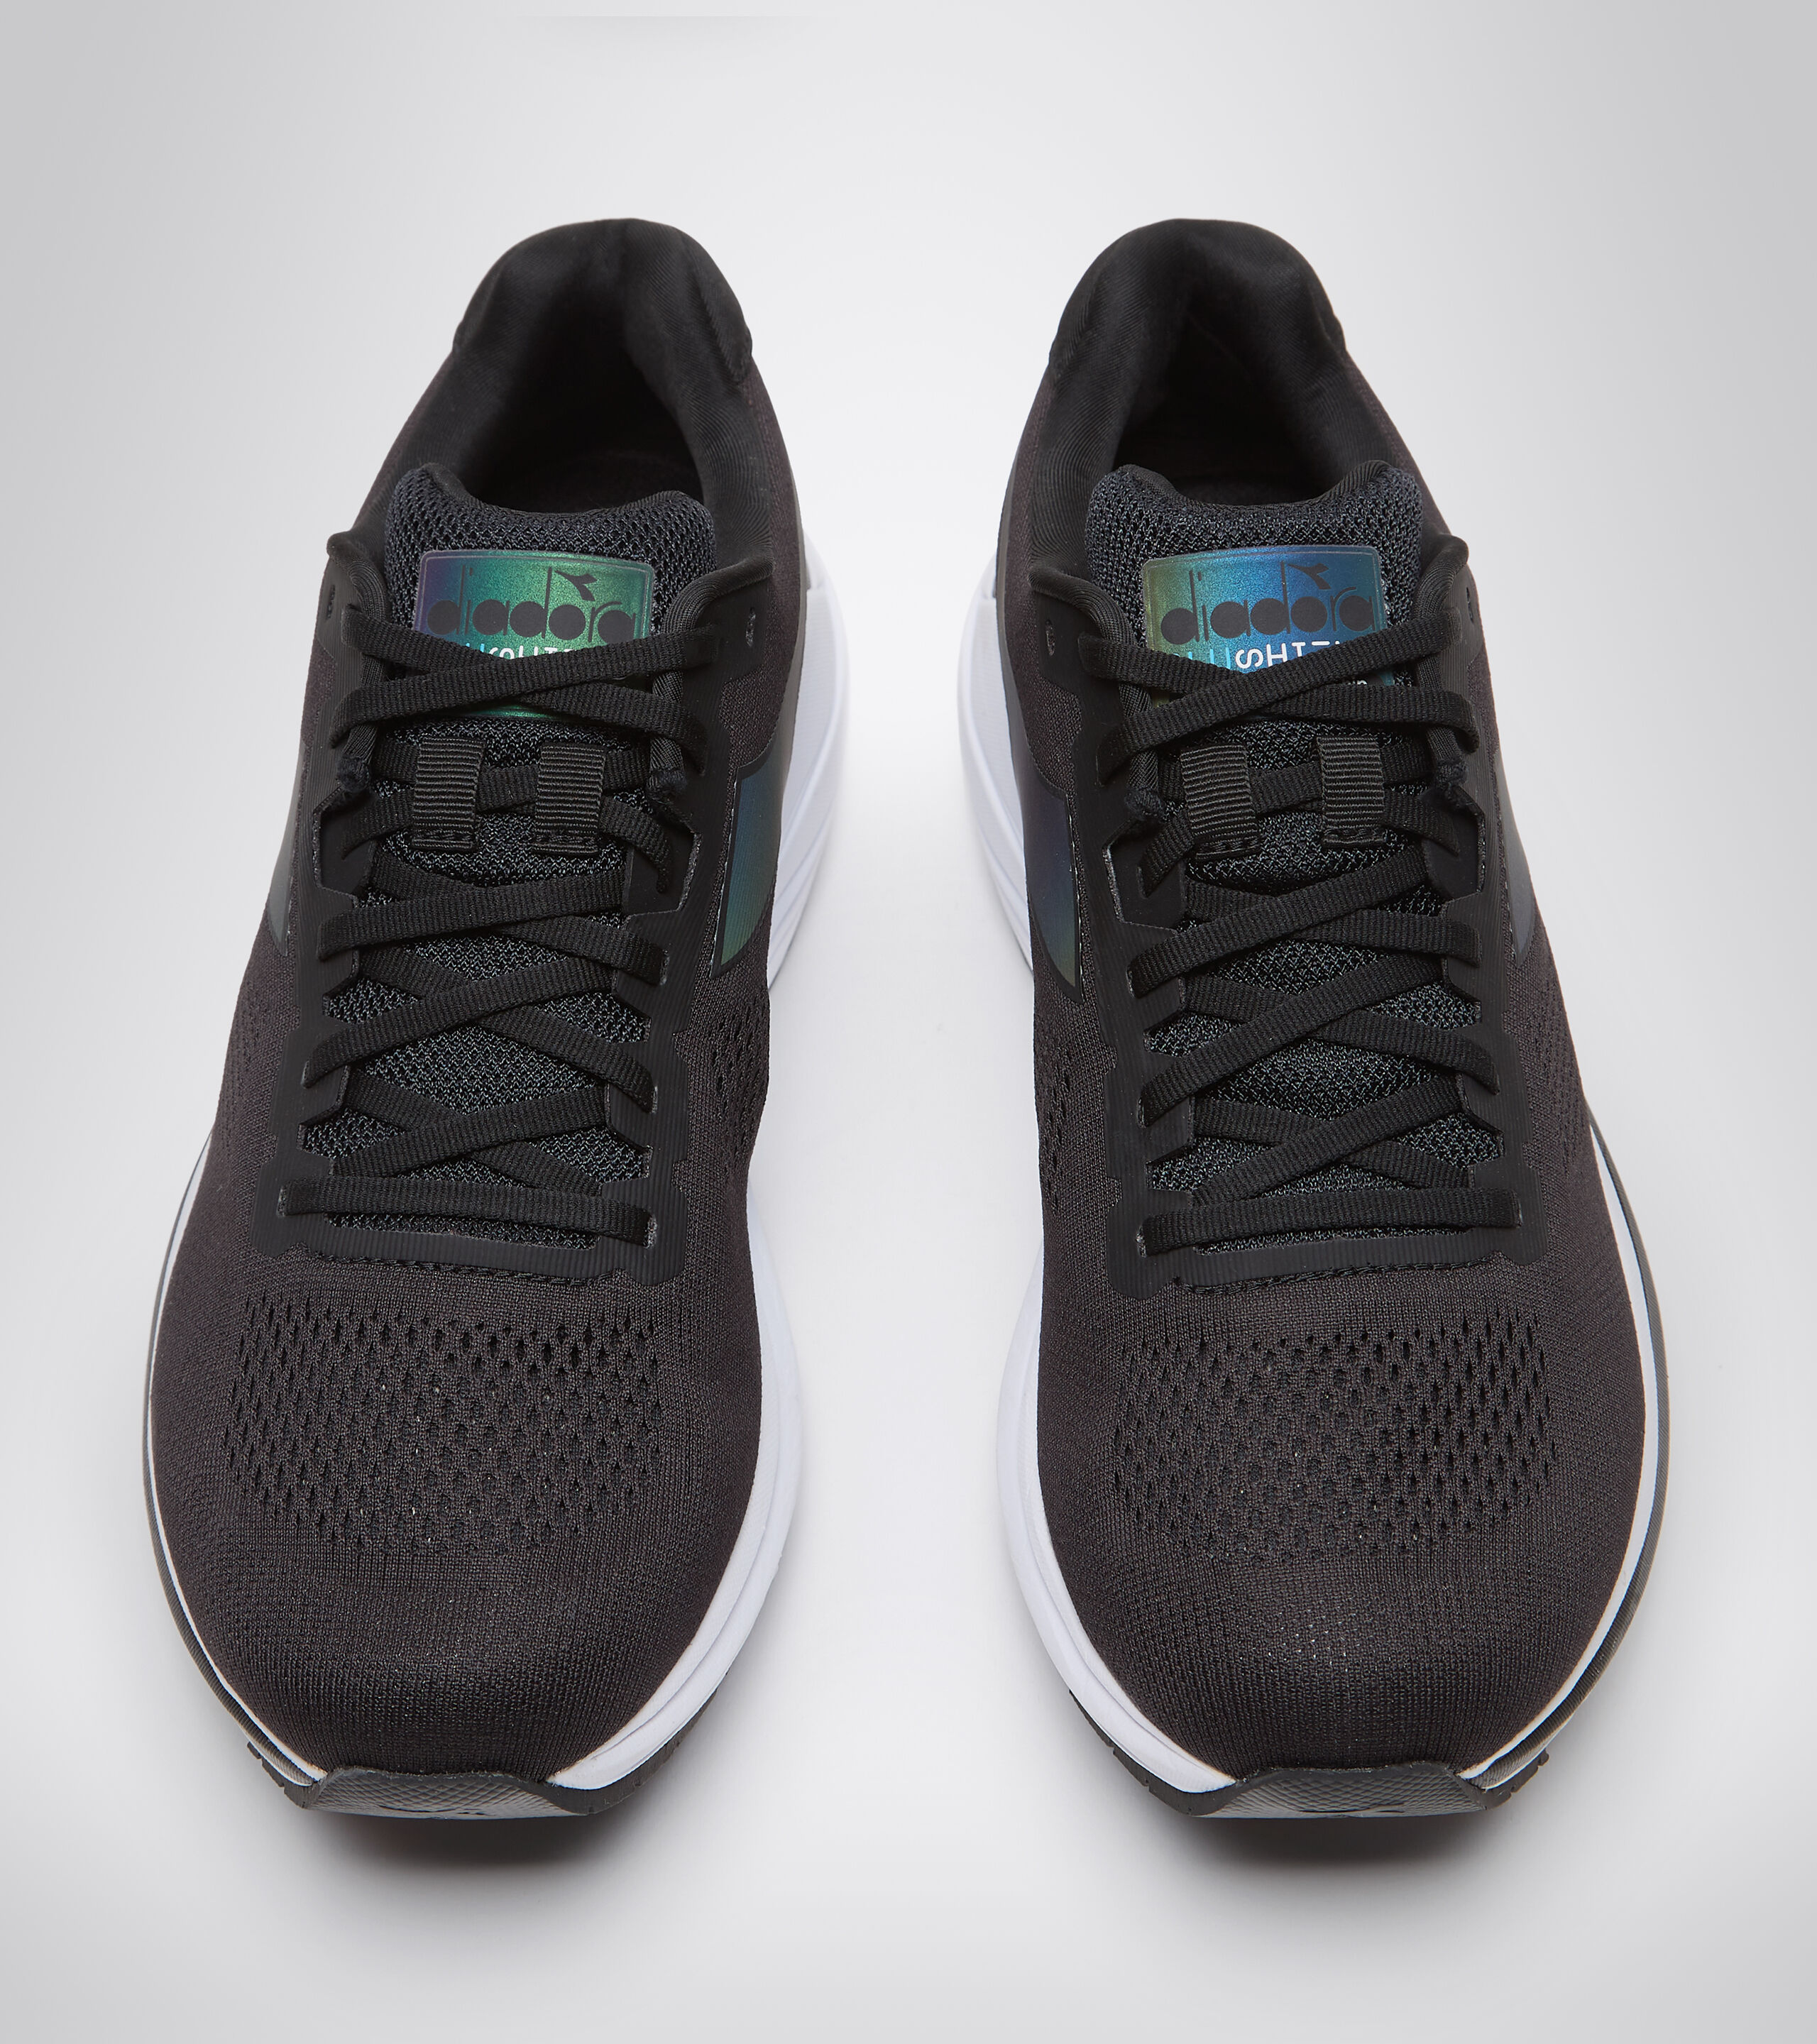 Diadora shoe running sneaker jogging man nj-303 Texture Black/superwhite 